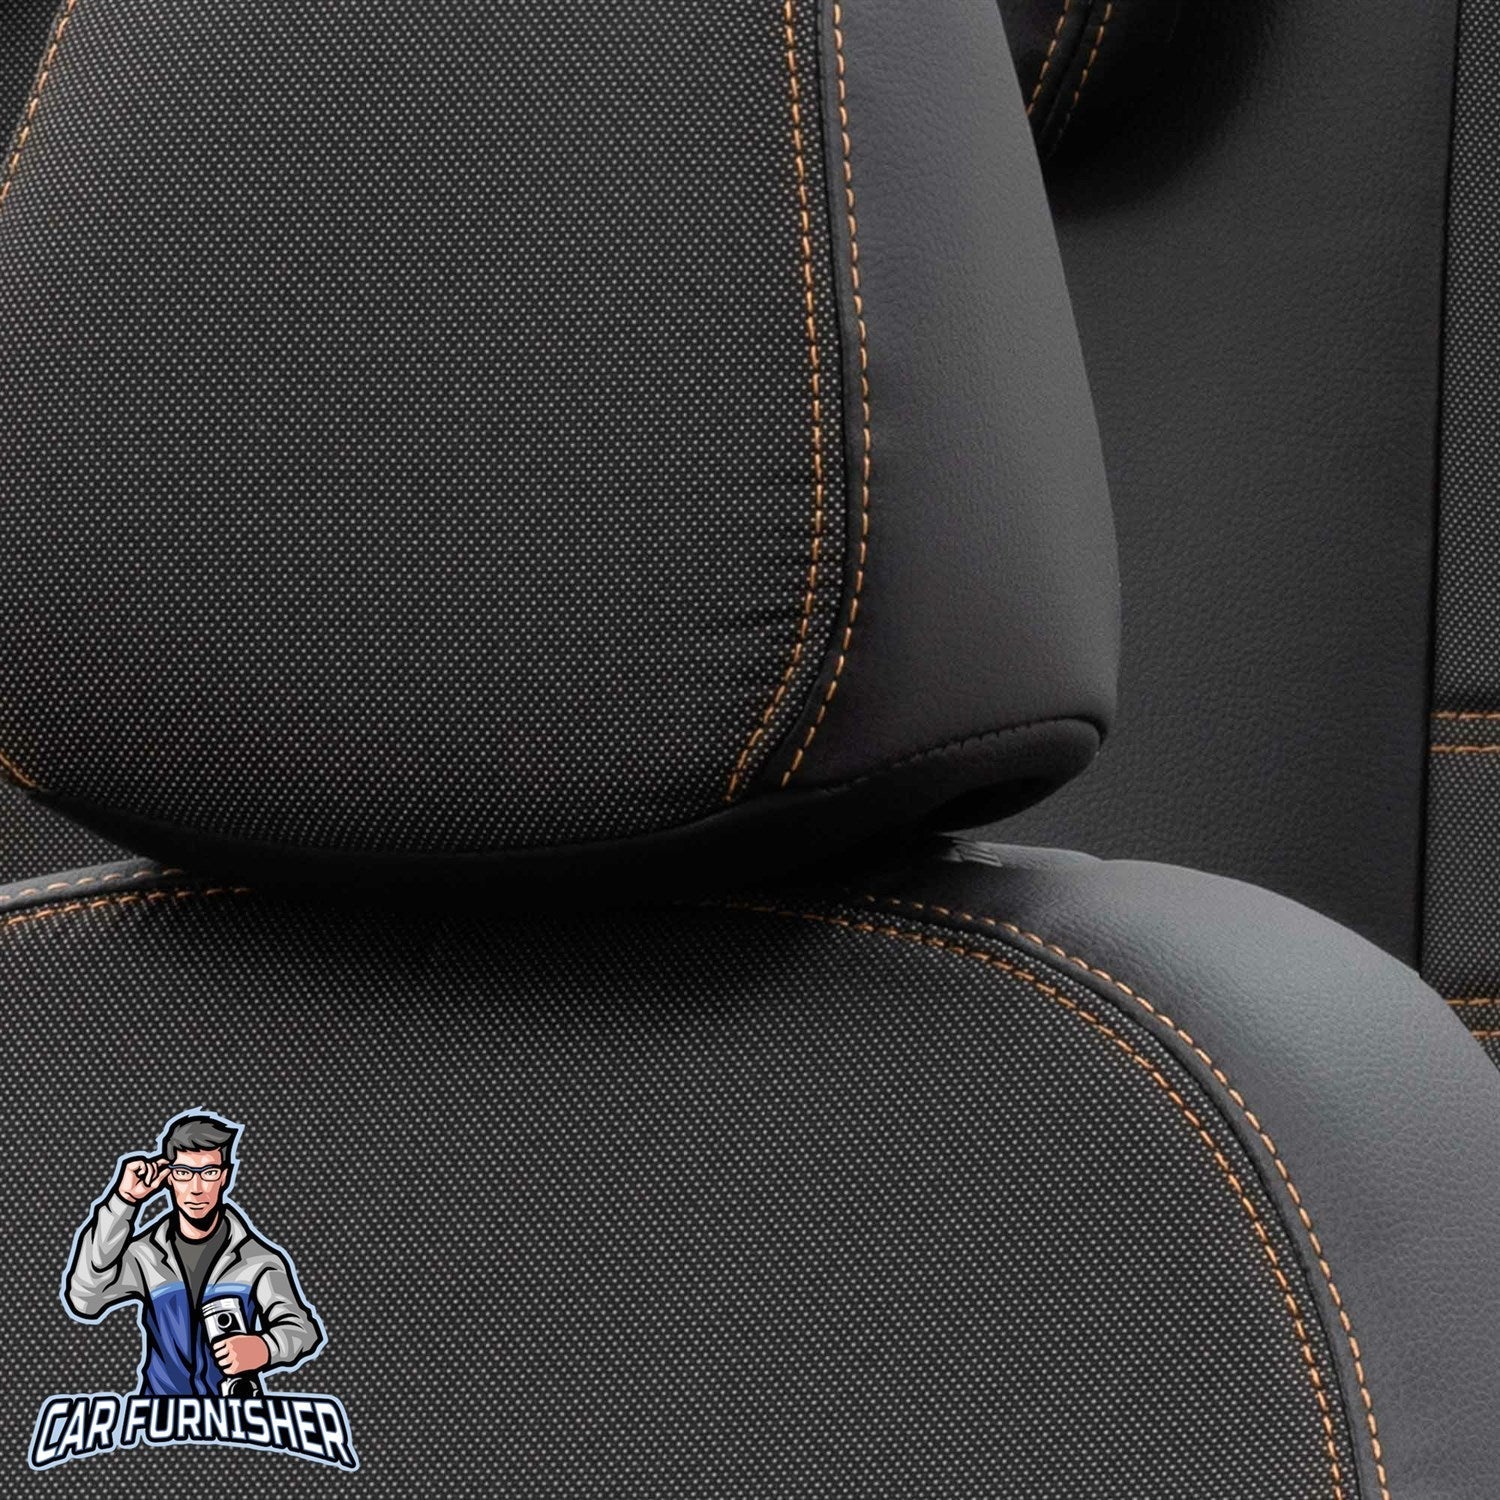 Toyota Camry Seat Cover Paris Leather & Jacquard Design Dark Beige Leather & Jacquard Fabric